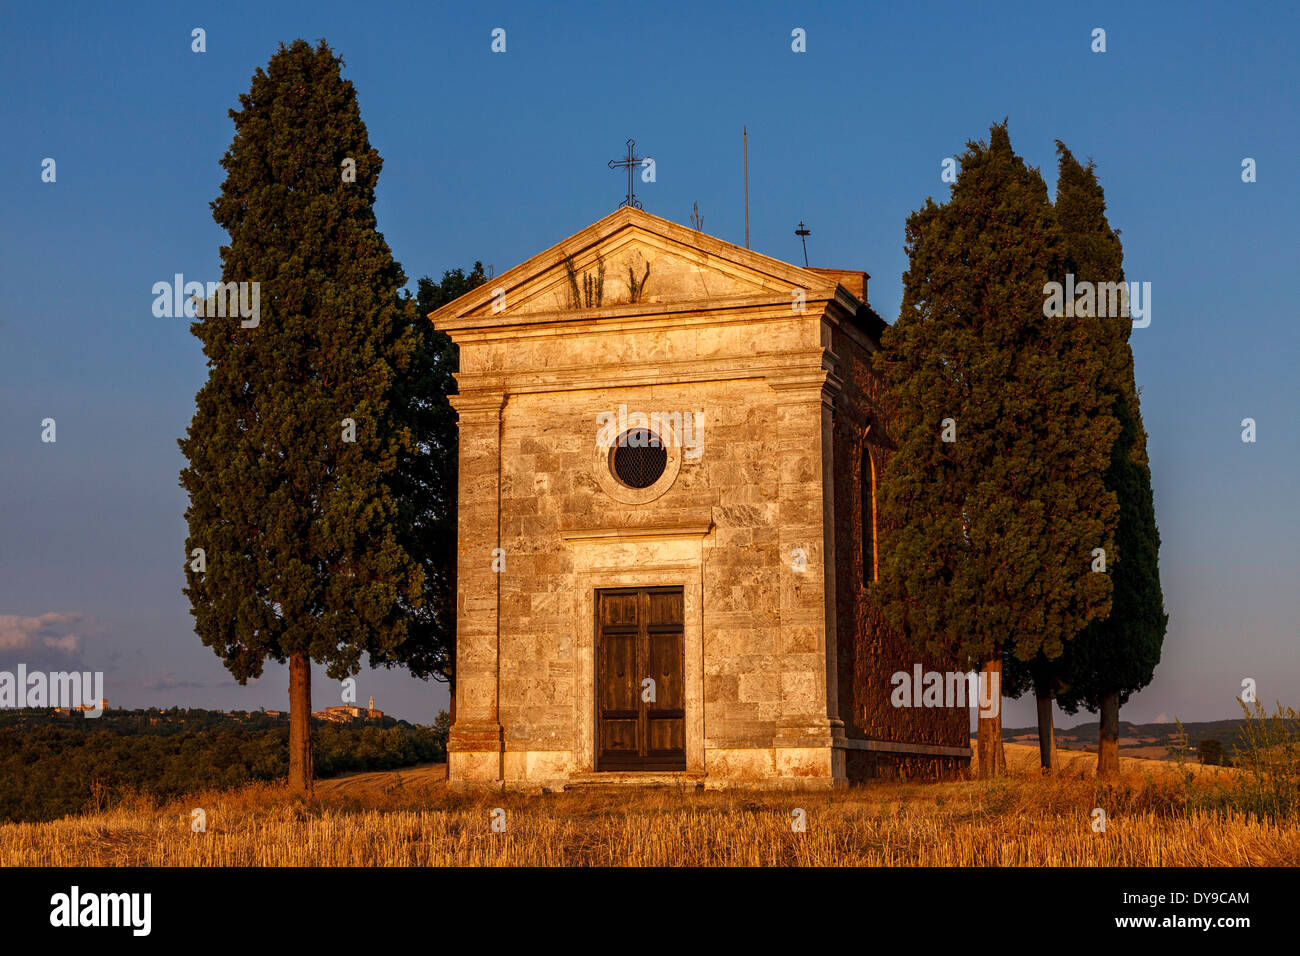 Klassischen toskanischen Landschaft, in der Nähe von Pienza, Toskana, Italien Stockfoto